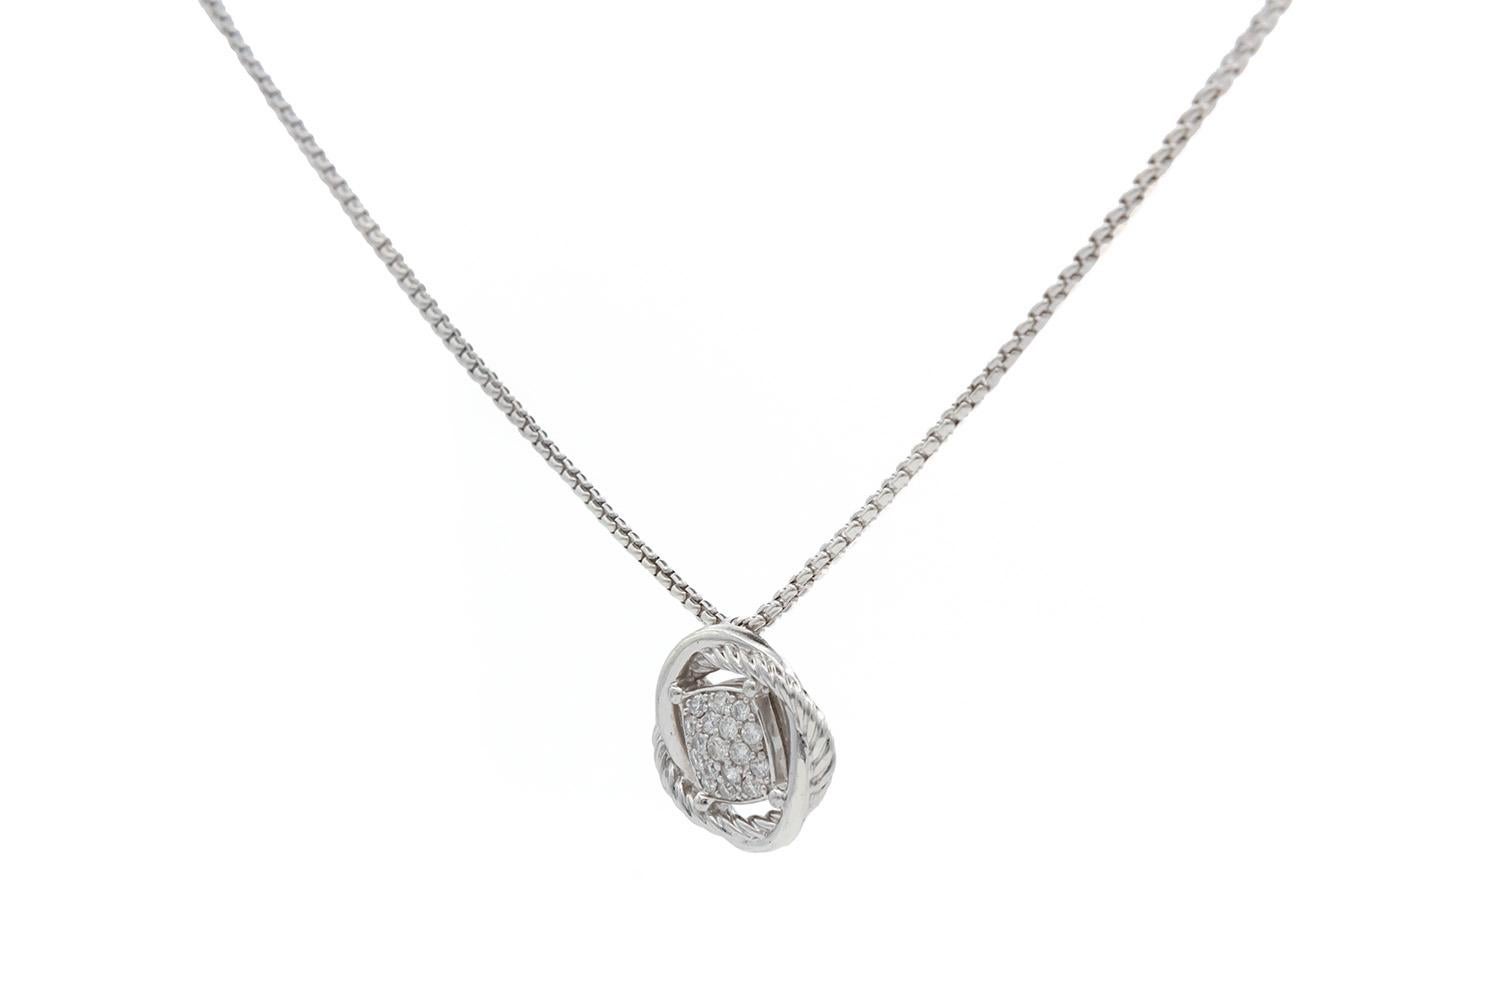 Contemporary David Yurman Sterling Silver & Diamond Pave Infinity Cable Necklace Pendant